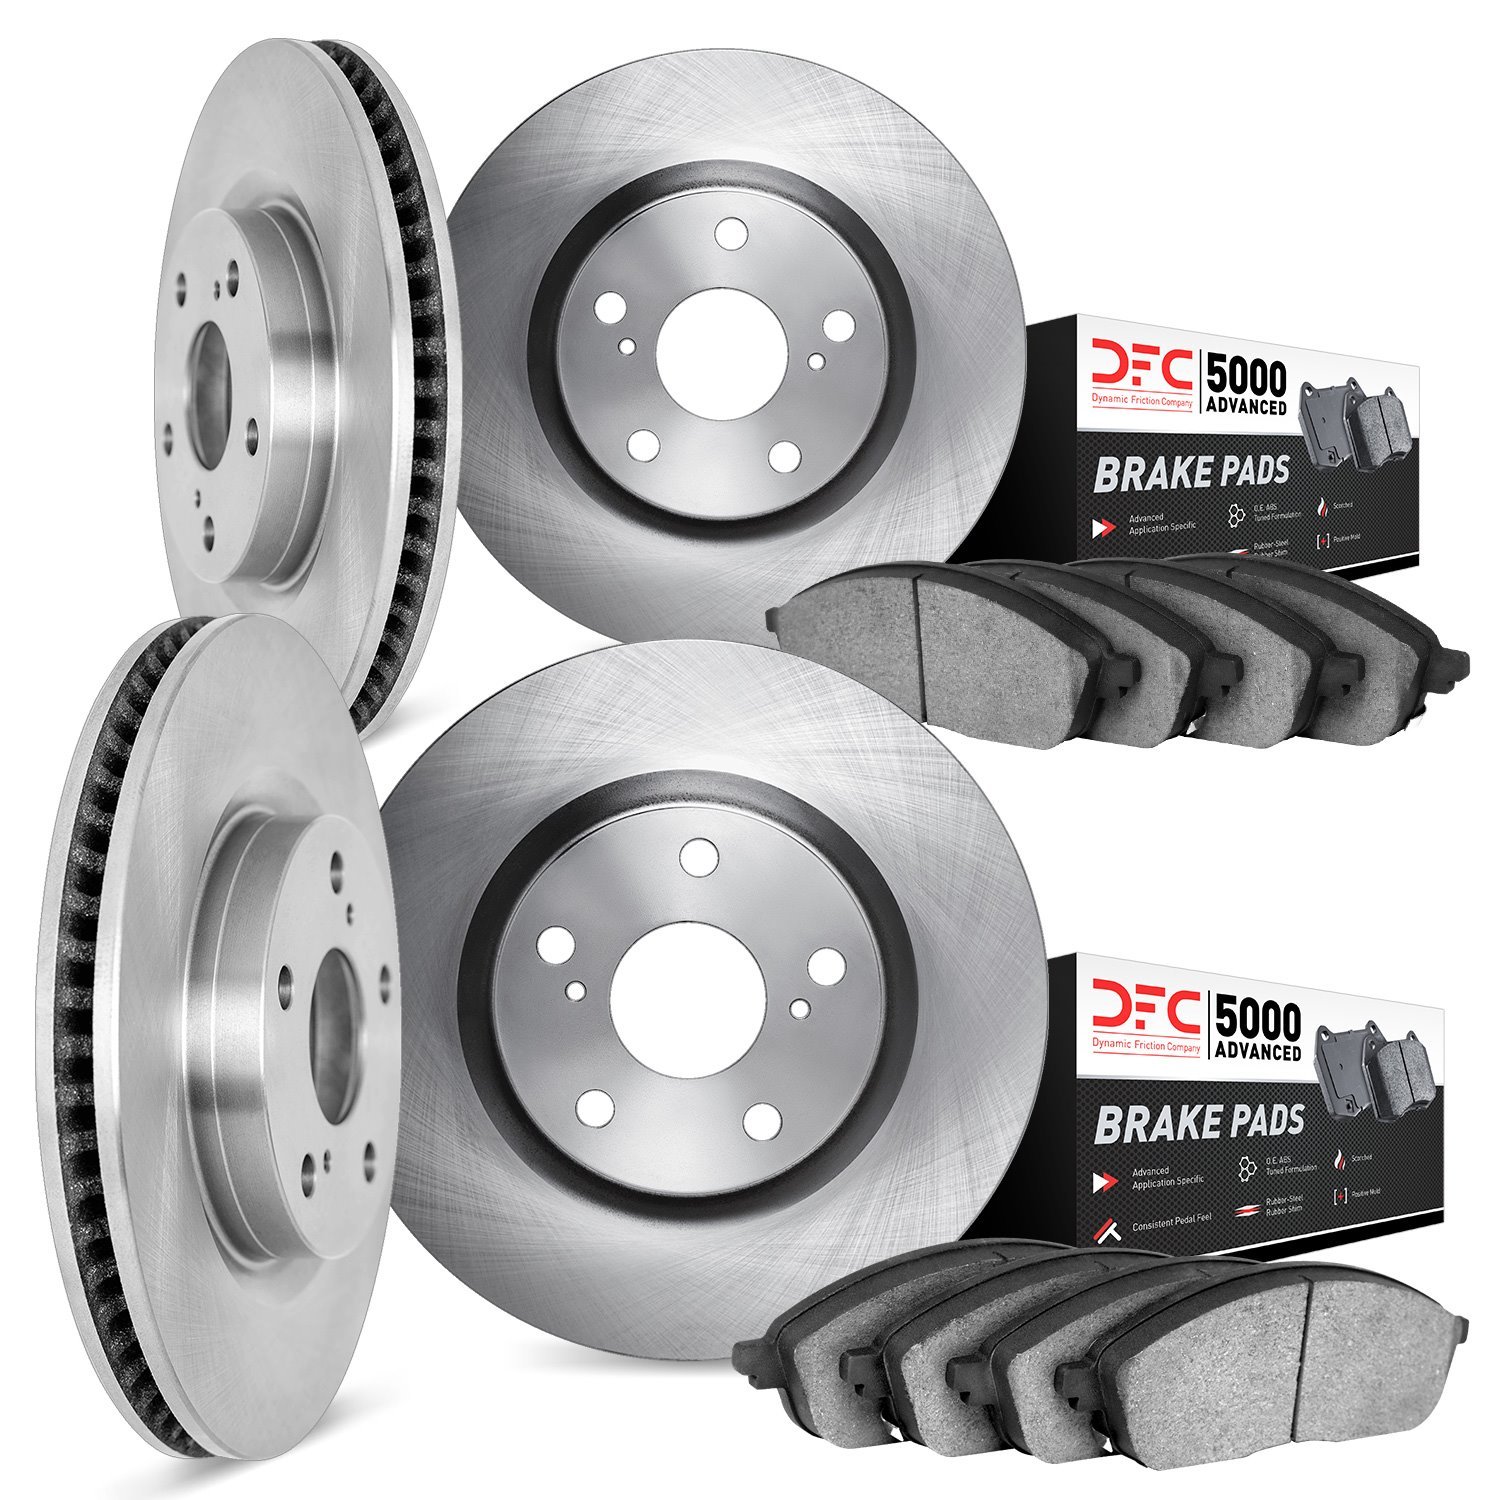 6504-67301 Brake Rotors w/5000 Advanced Brake Pads Kit, Fits Select Infiniti/Nissan, Position: Front and Rear